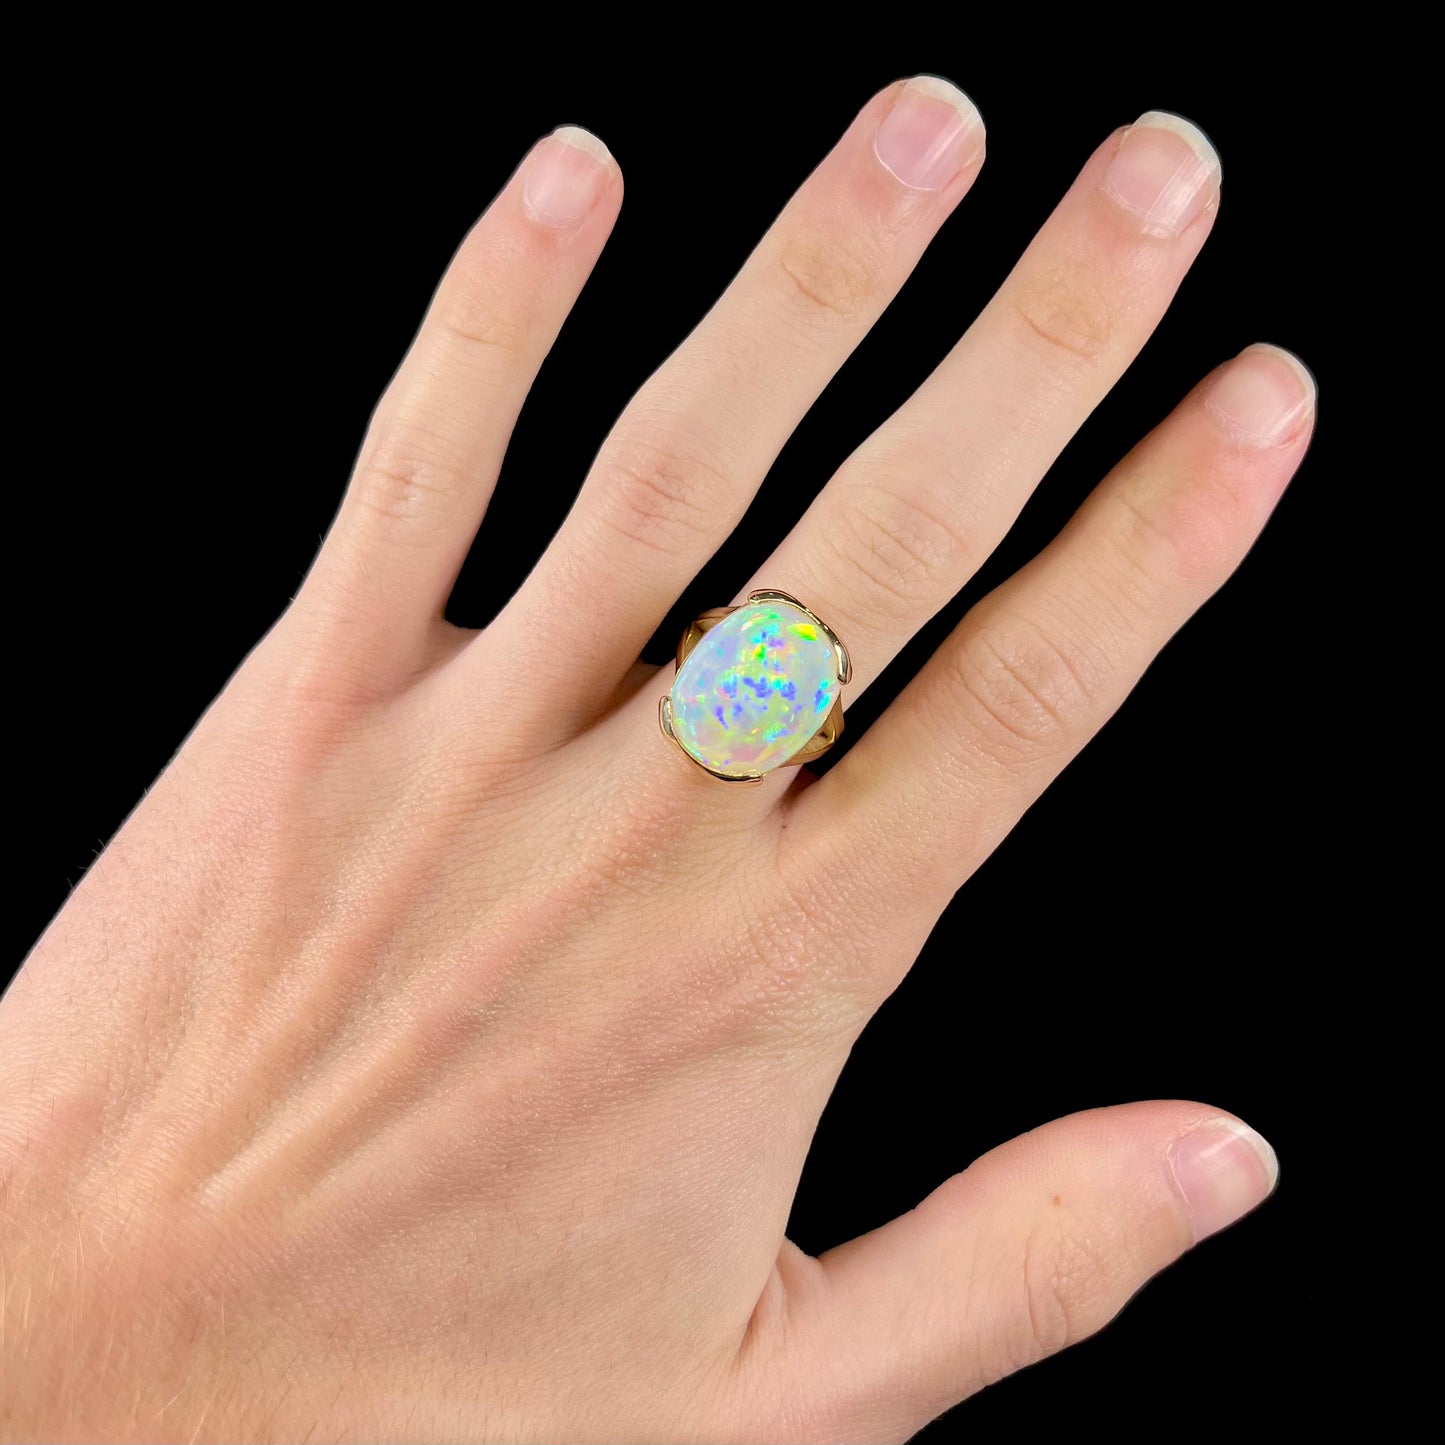 A ladies' yellow gold split shank ring half-bezel set with a barrel cabochon cut natural Ethiopian fire opal stone.